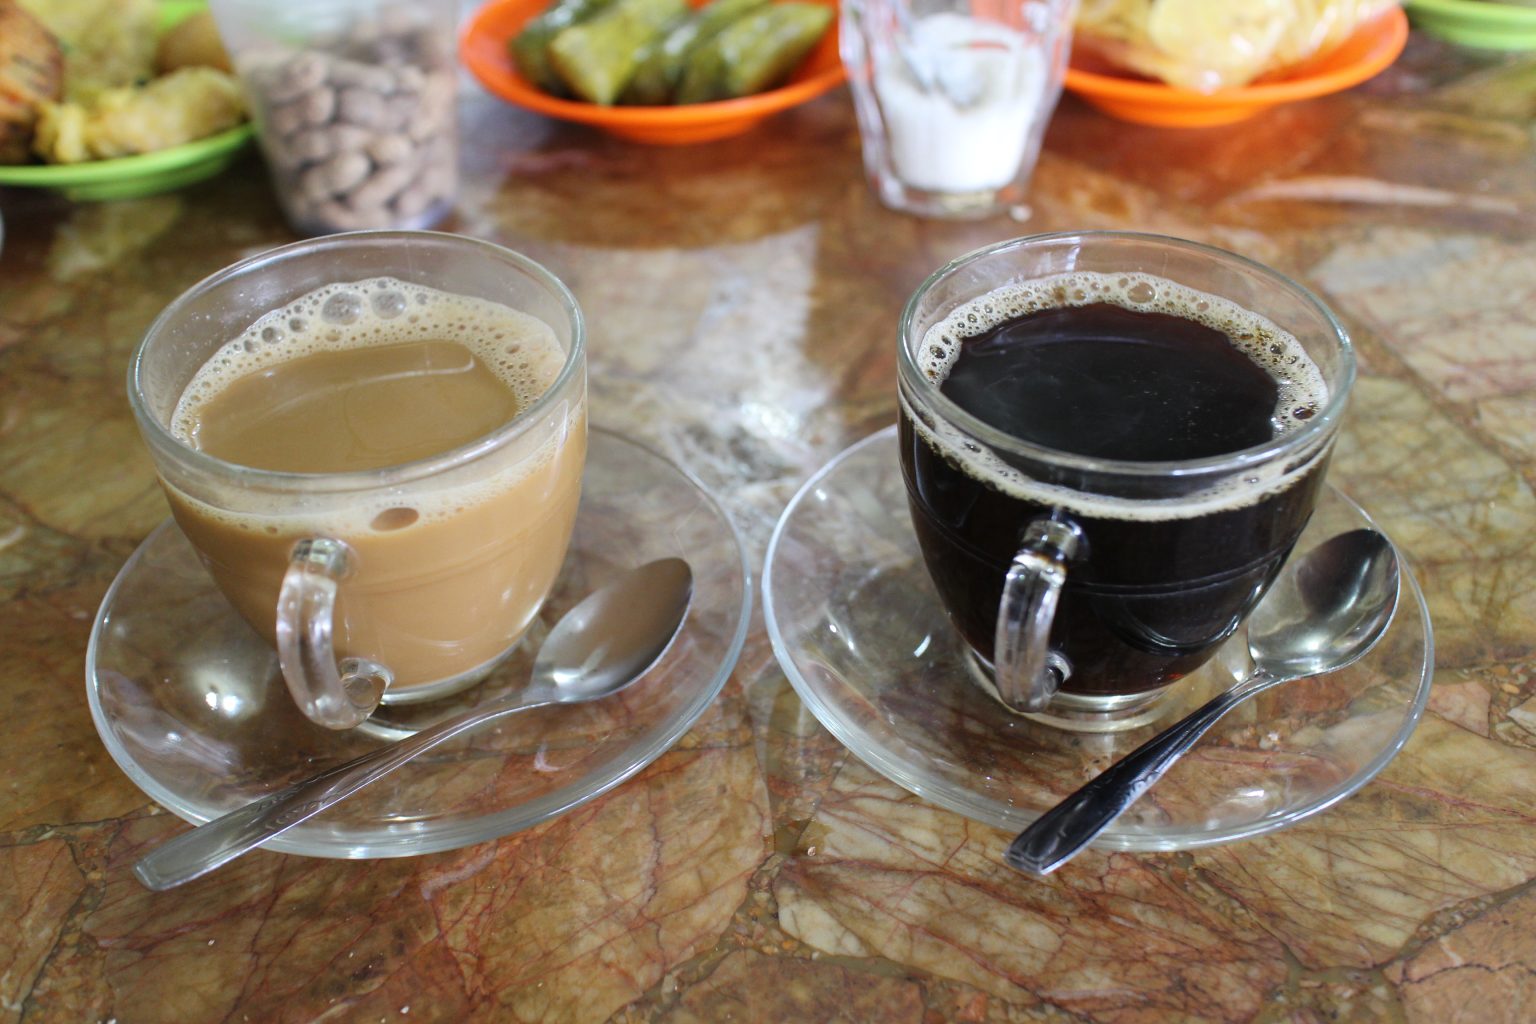 Warung Kopi Dan Bilyar - Coffee Shop Recommend!